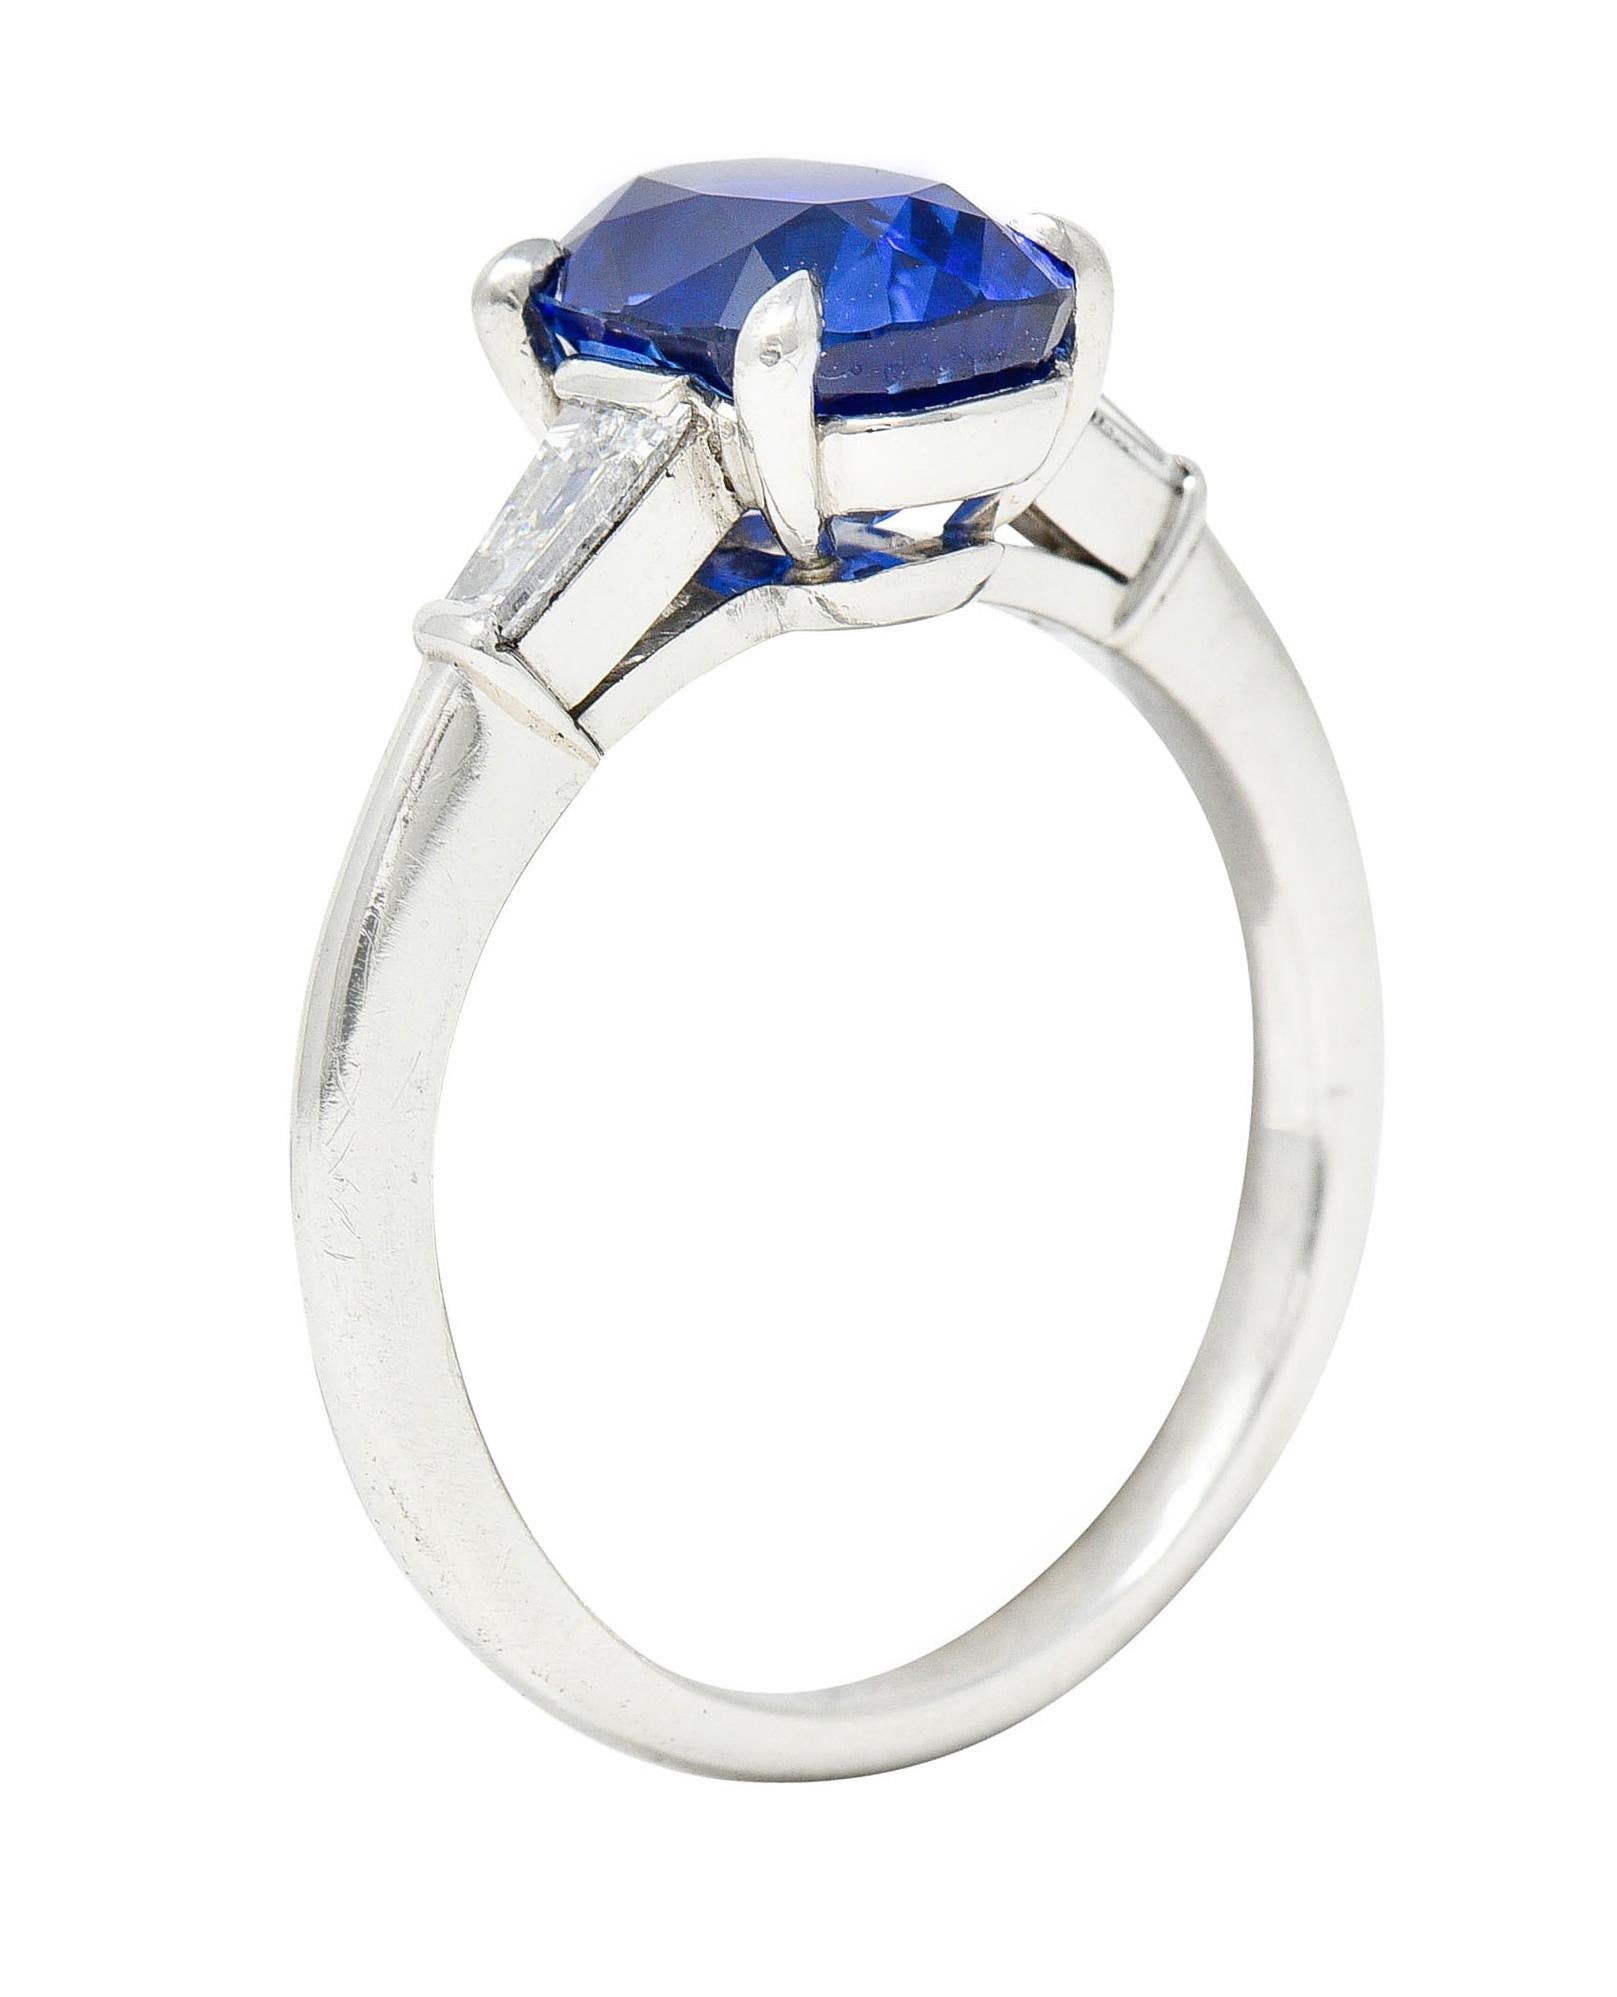 Tiffany & Co. 3.54 Carats No Heat Royal Blue Sapphire Diamond Platinum Ring 1